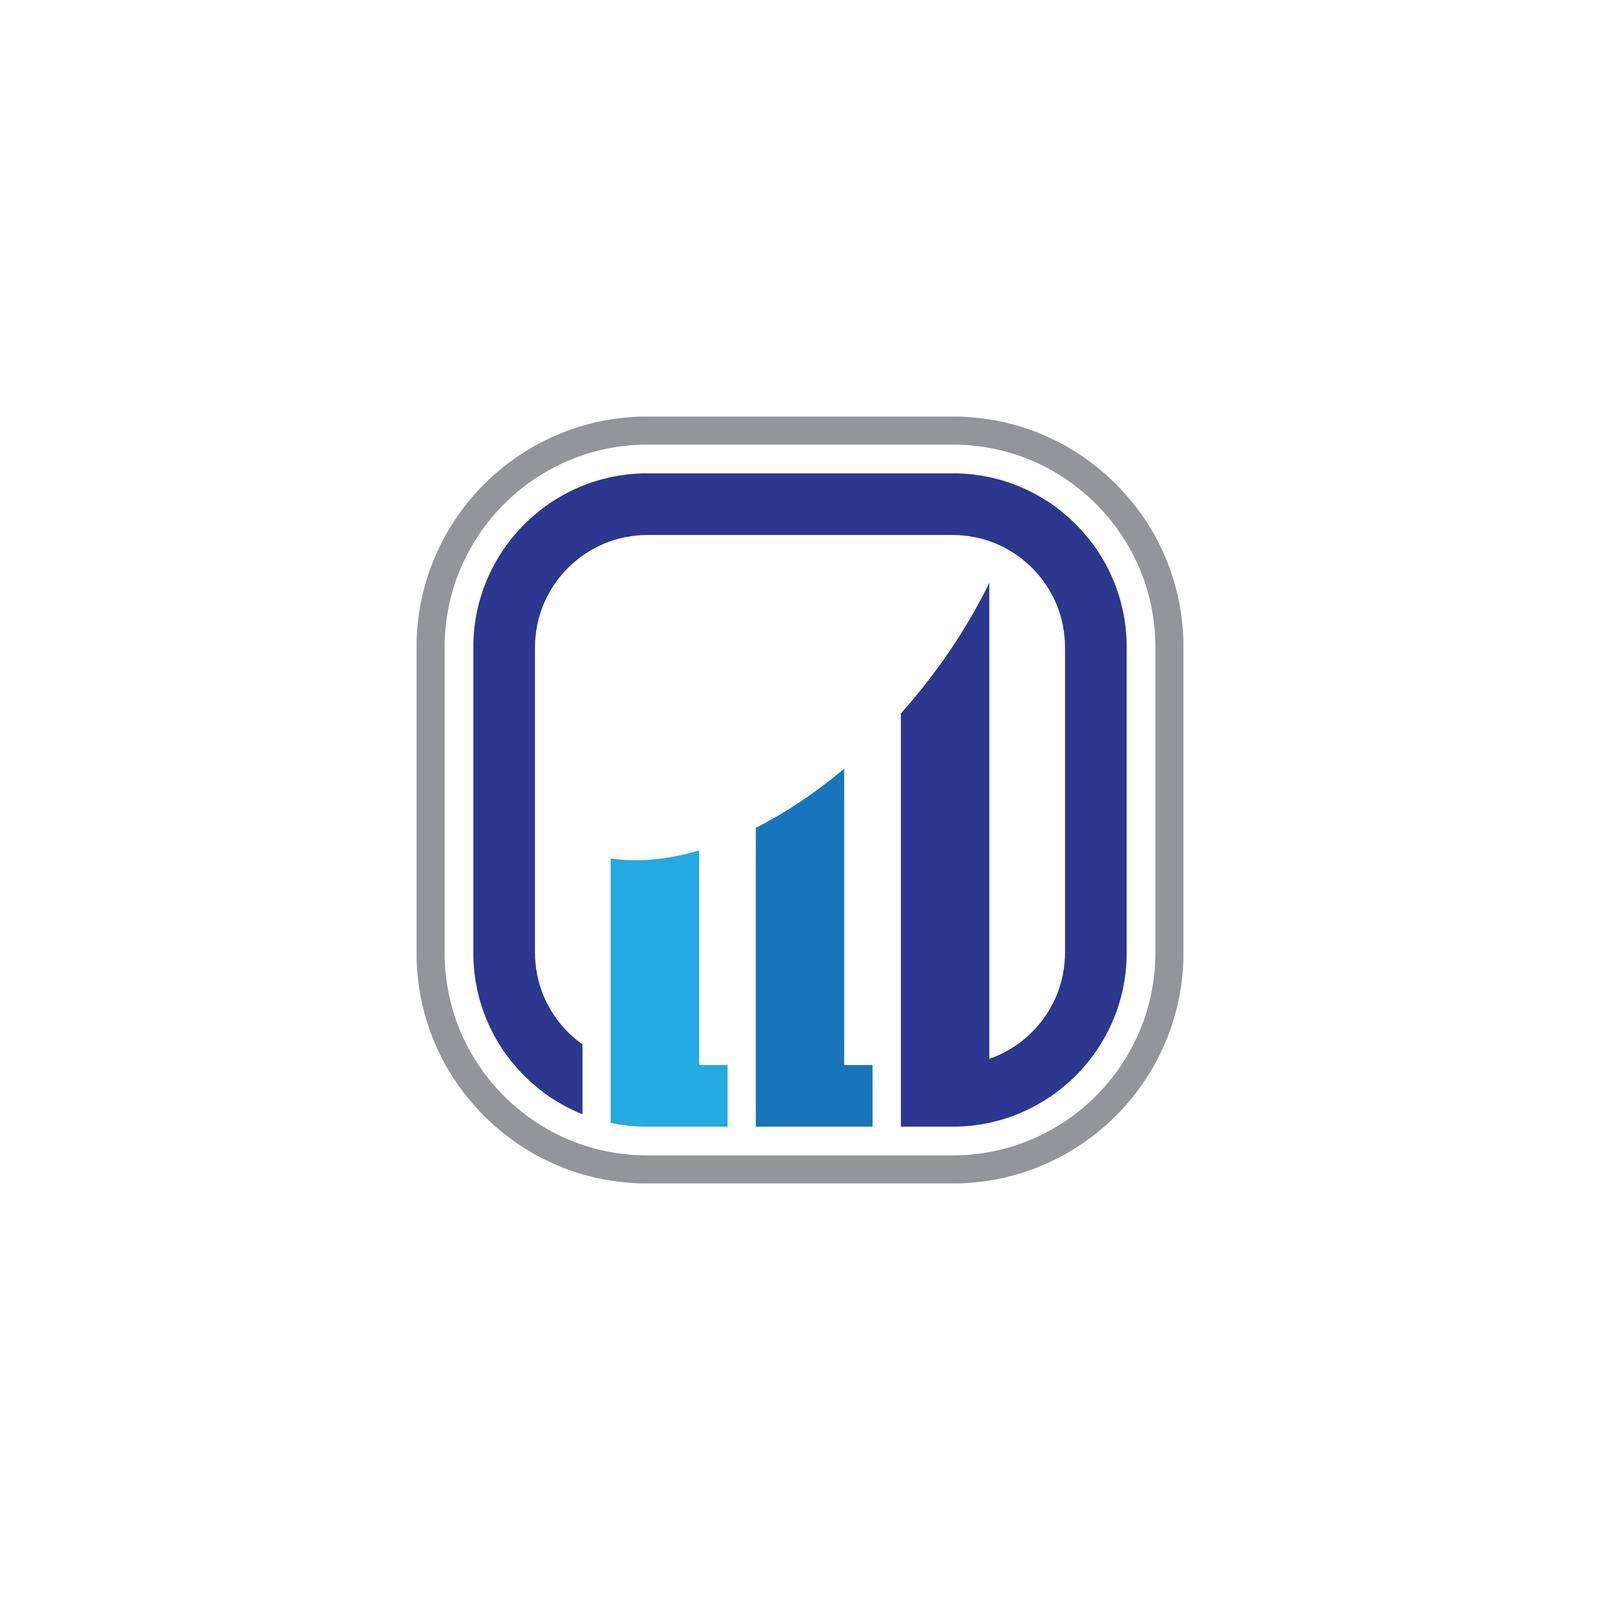 Financial business icon logo creative vector illustration